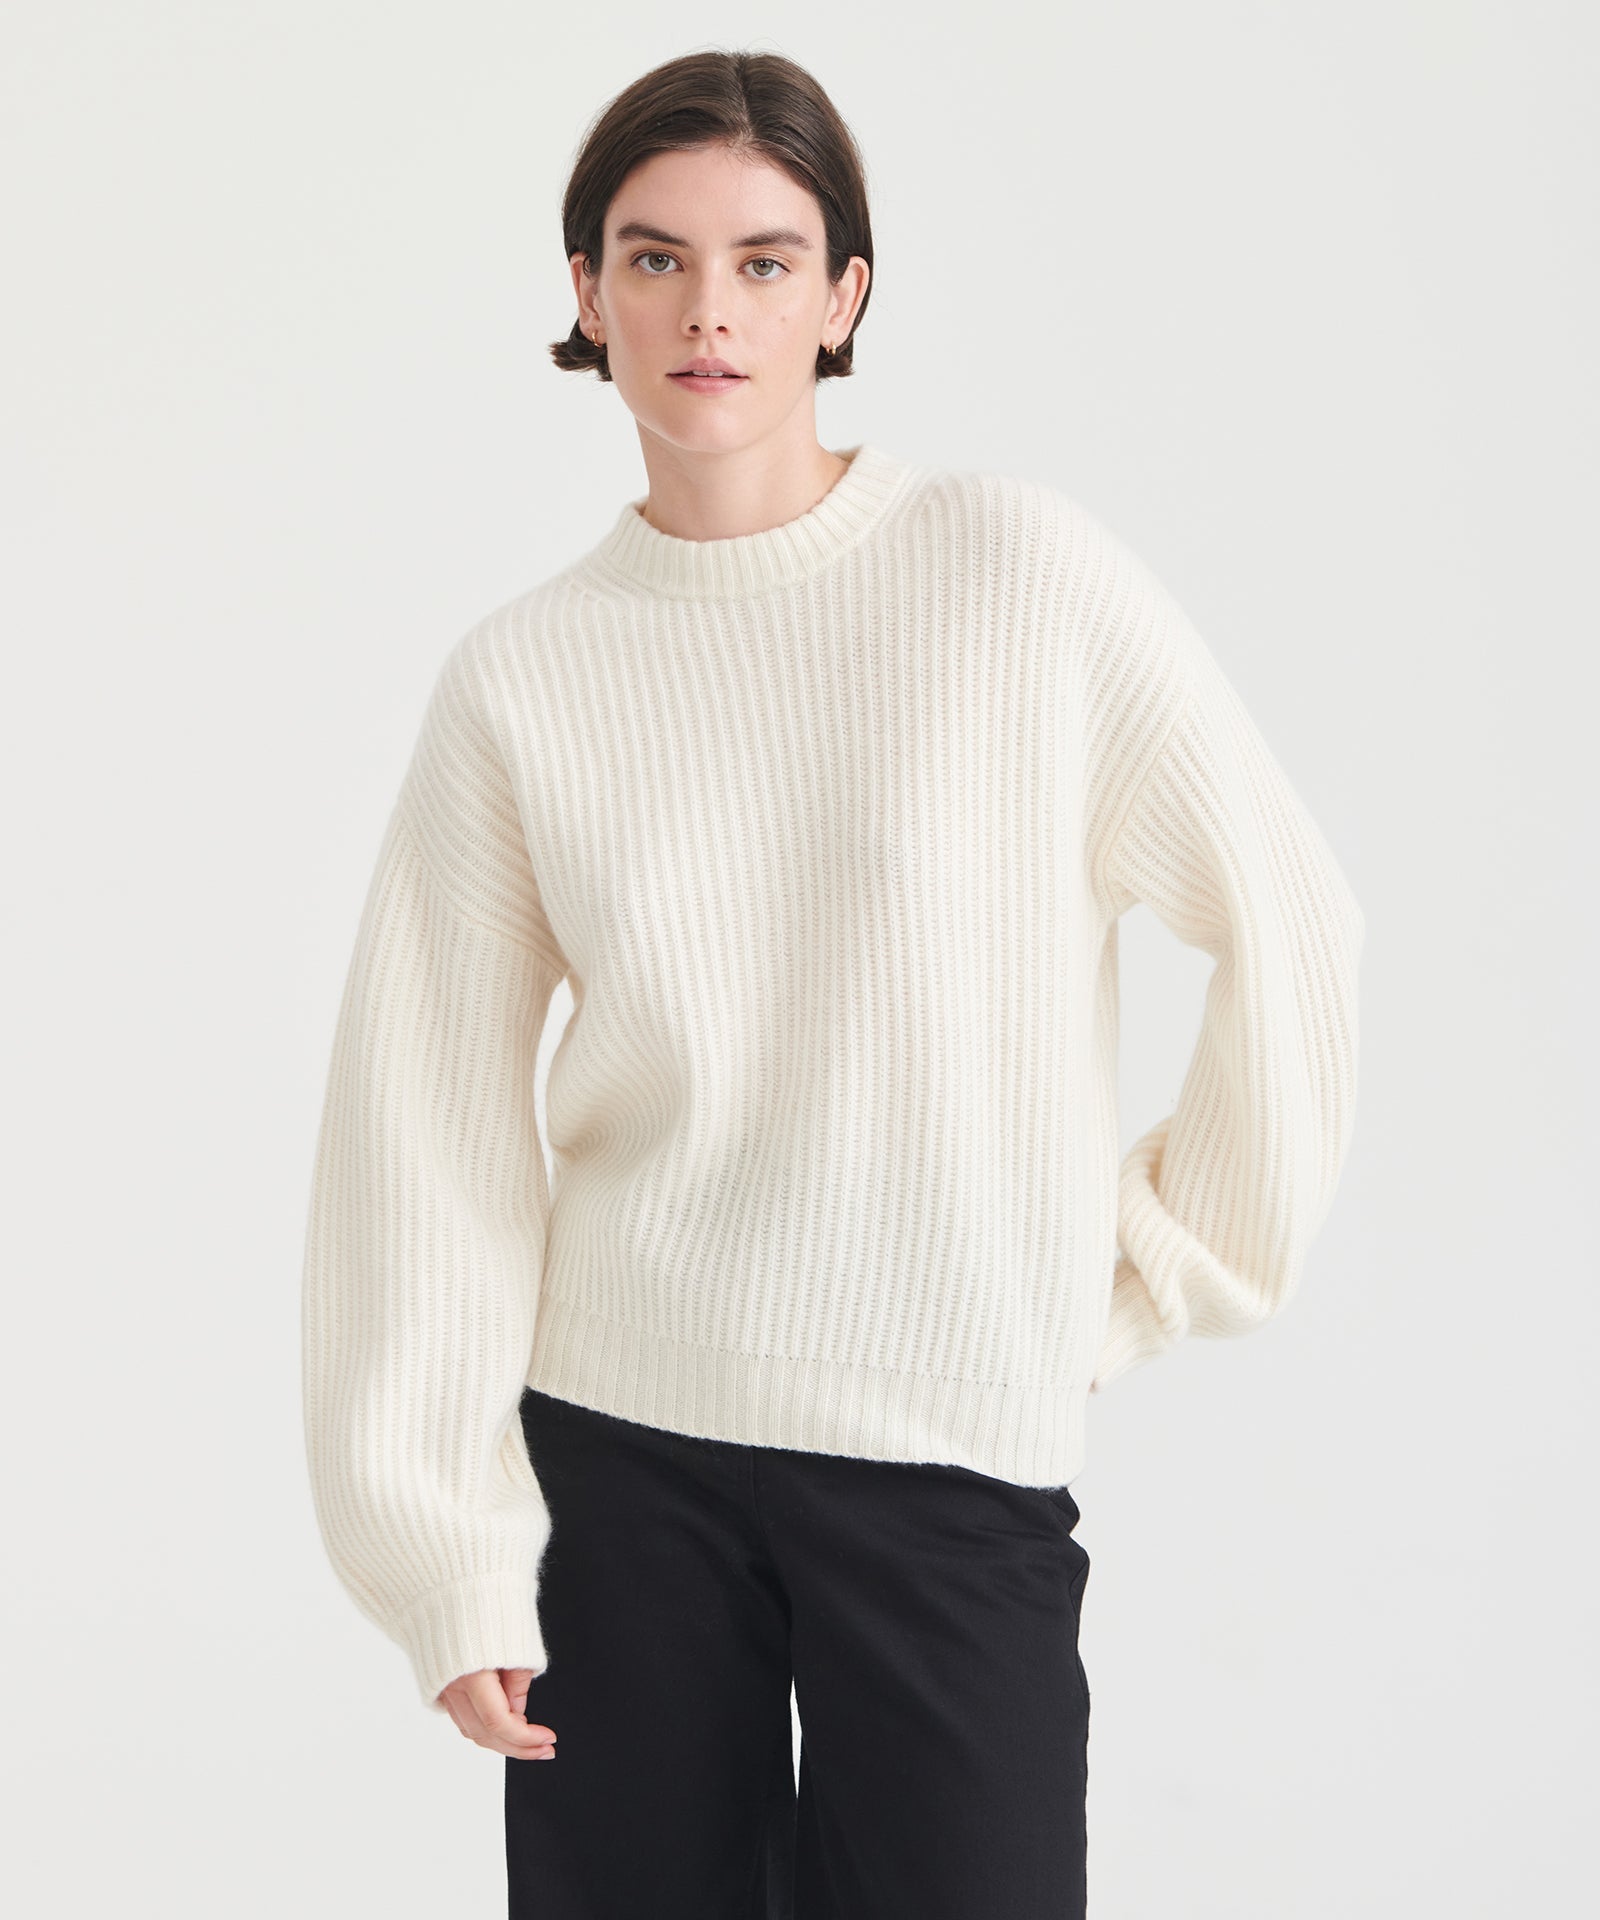 Naadam Super Luxe Cashmere Fisherman Sweater in White, S